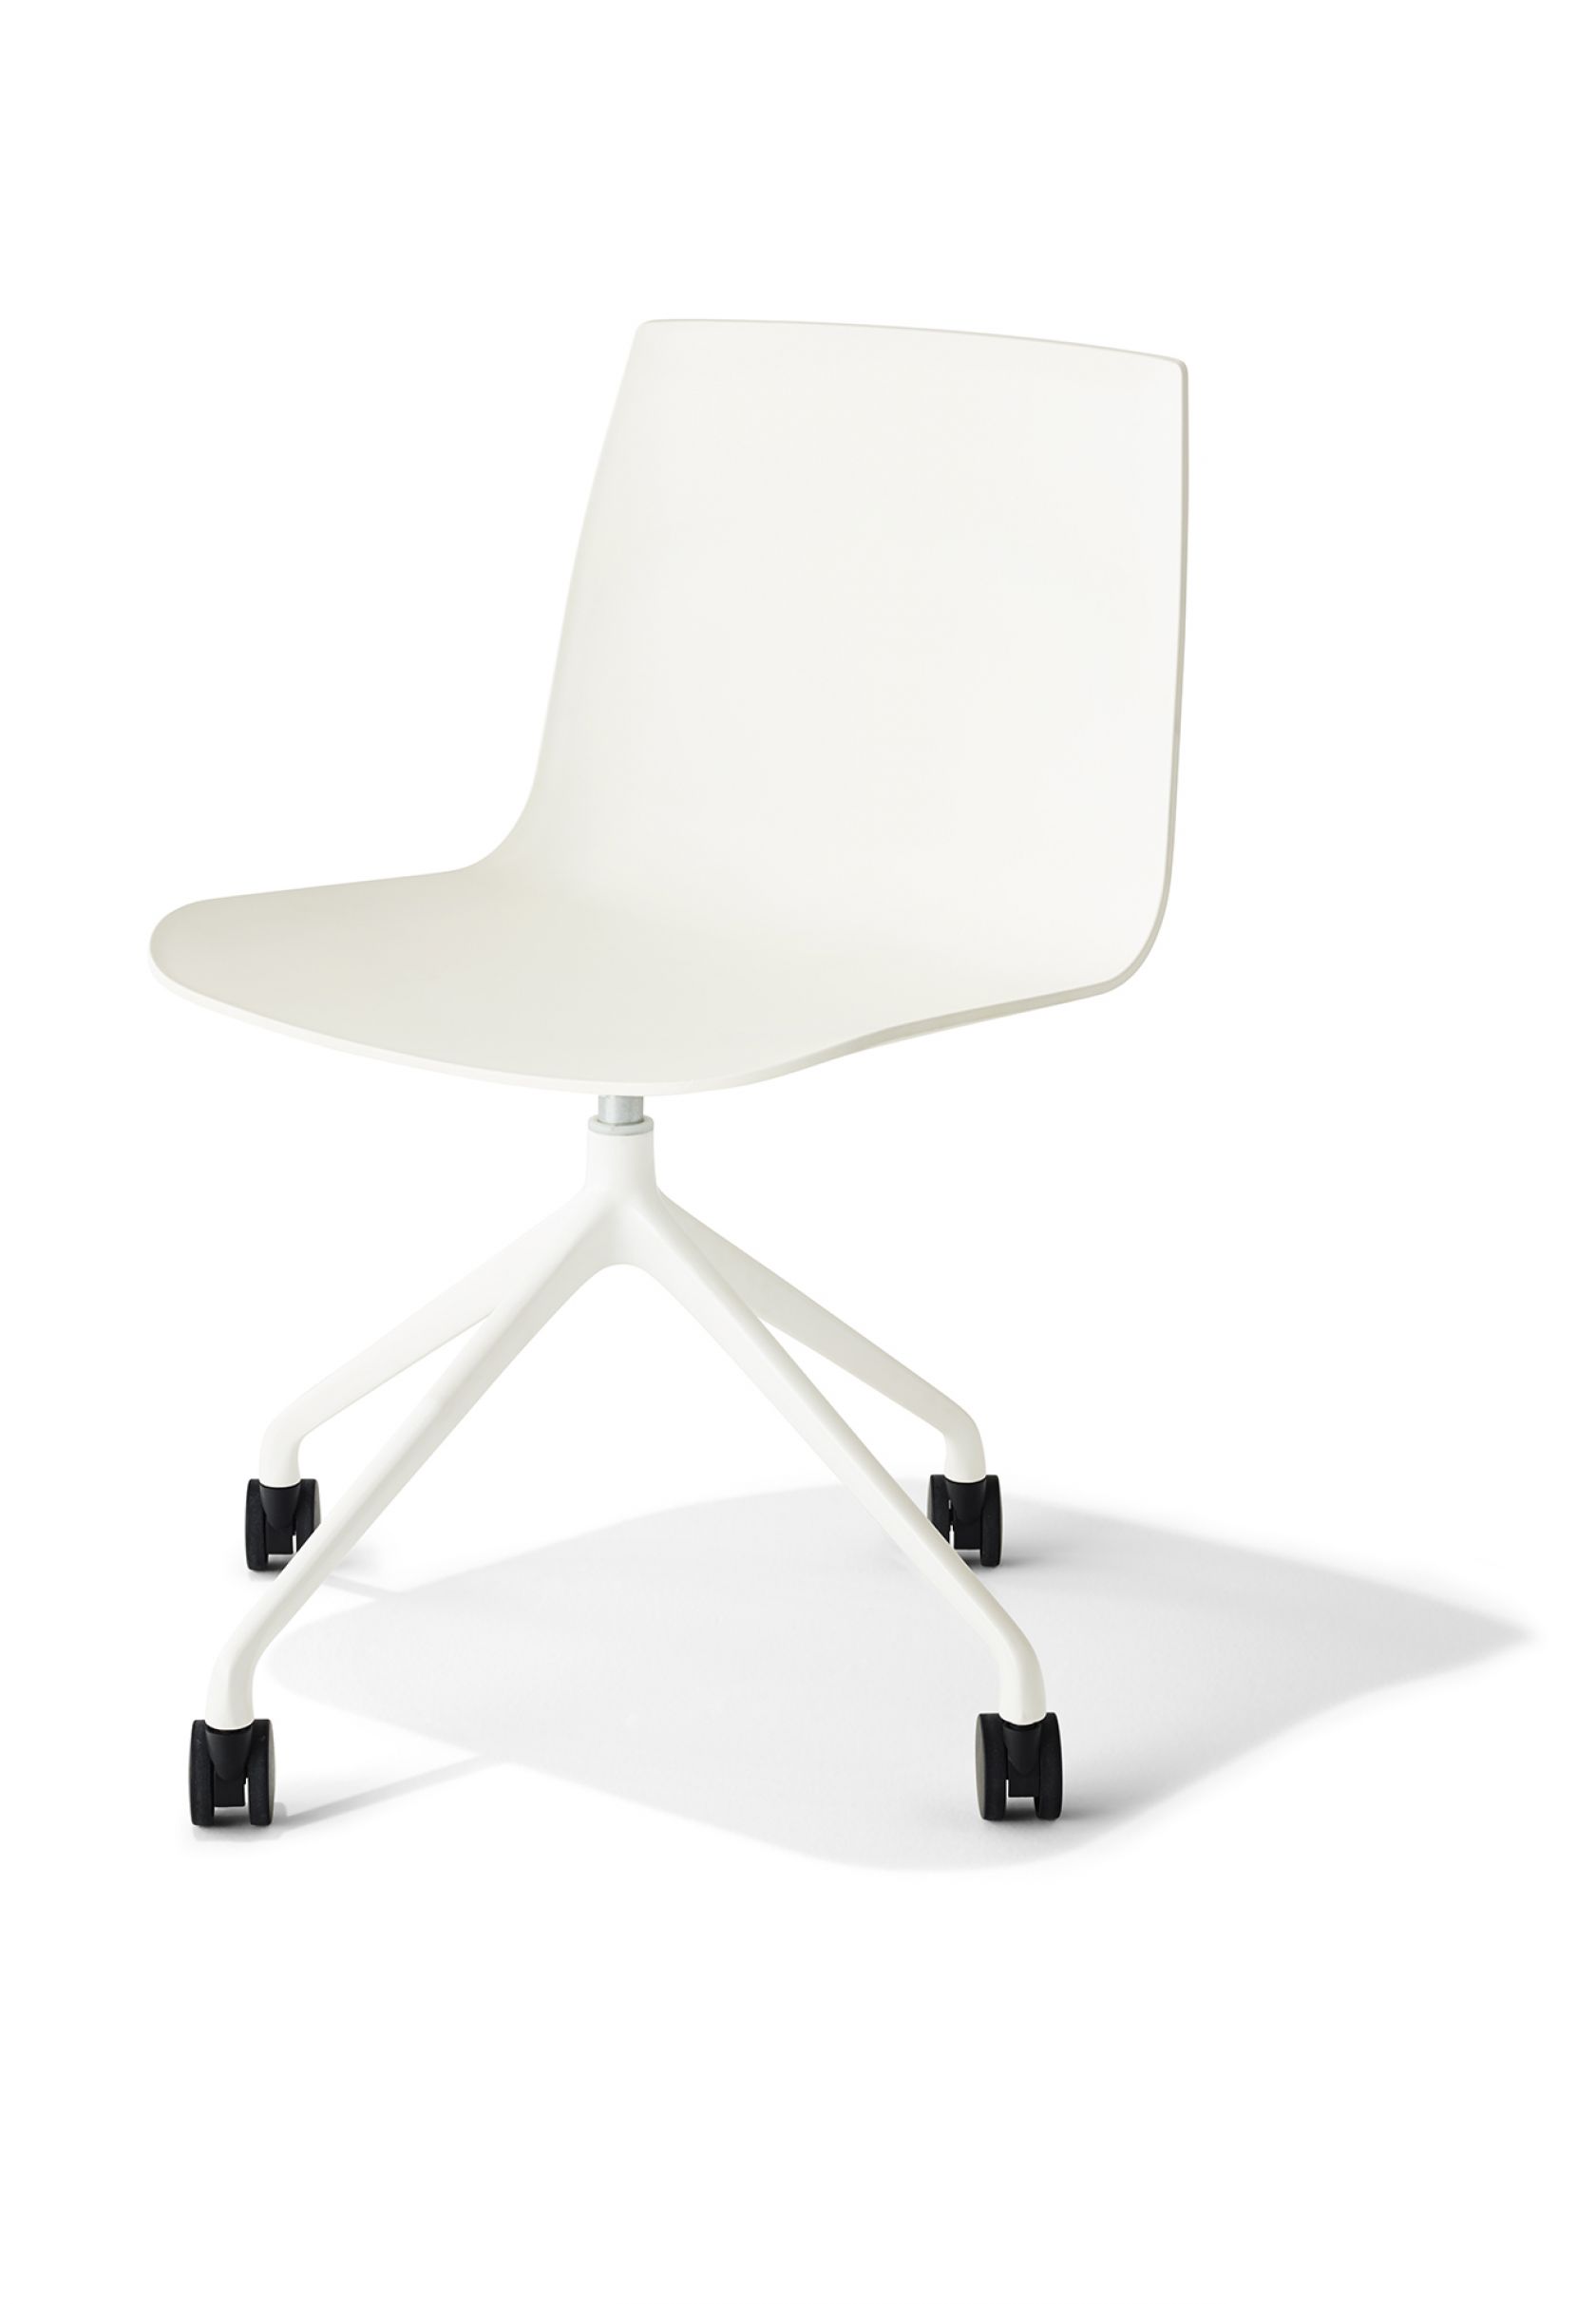 MR Chair | Schiavello Furniture